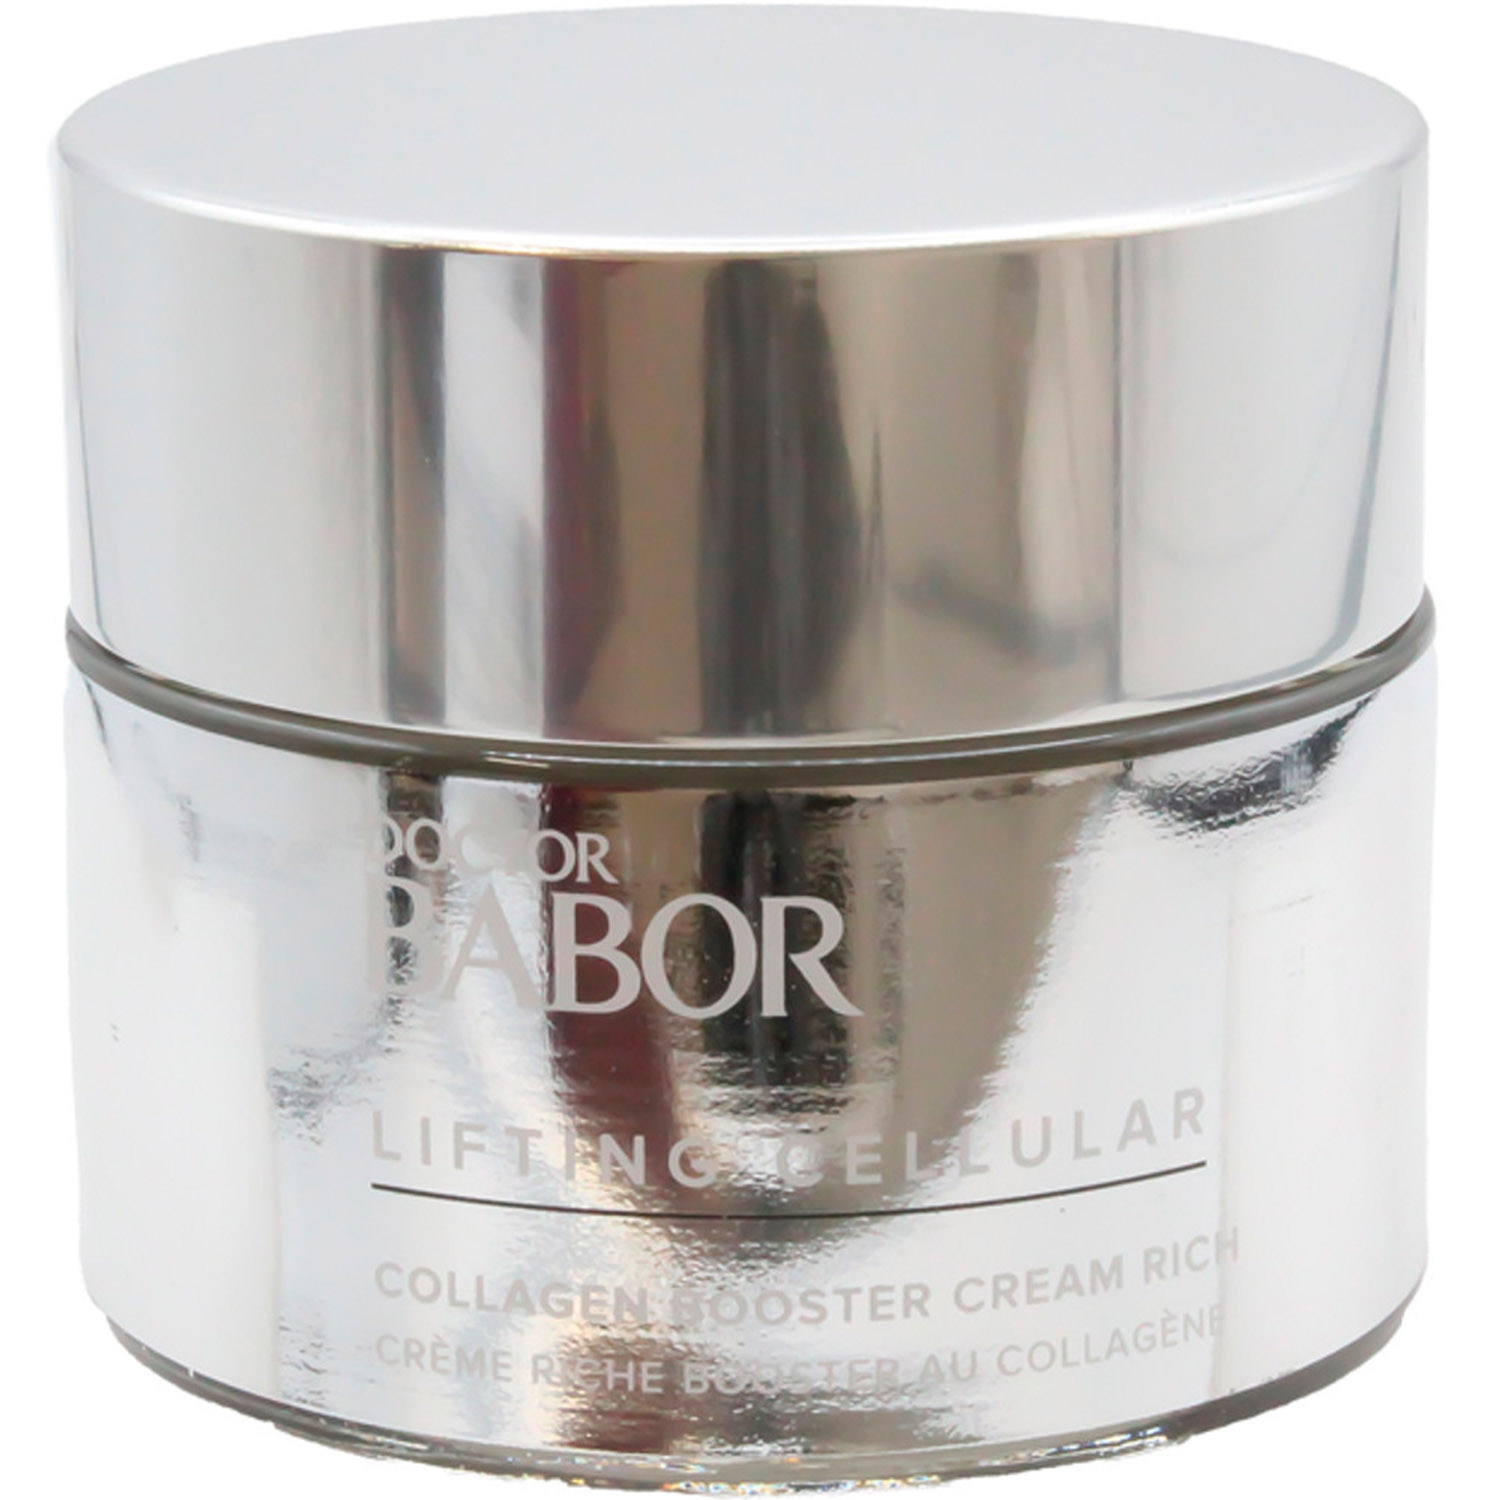 Крем для лица Babor Doctor Babor Collagen Booster Cream Rich, 50 мл - фото 1